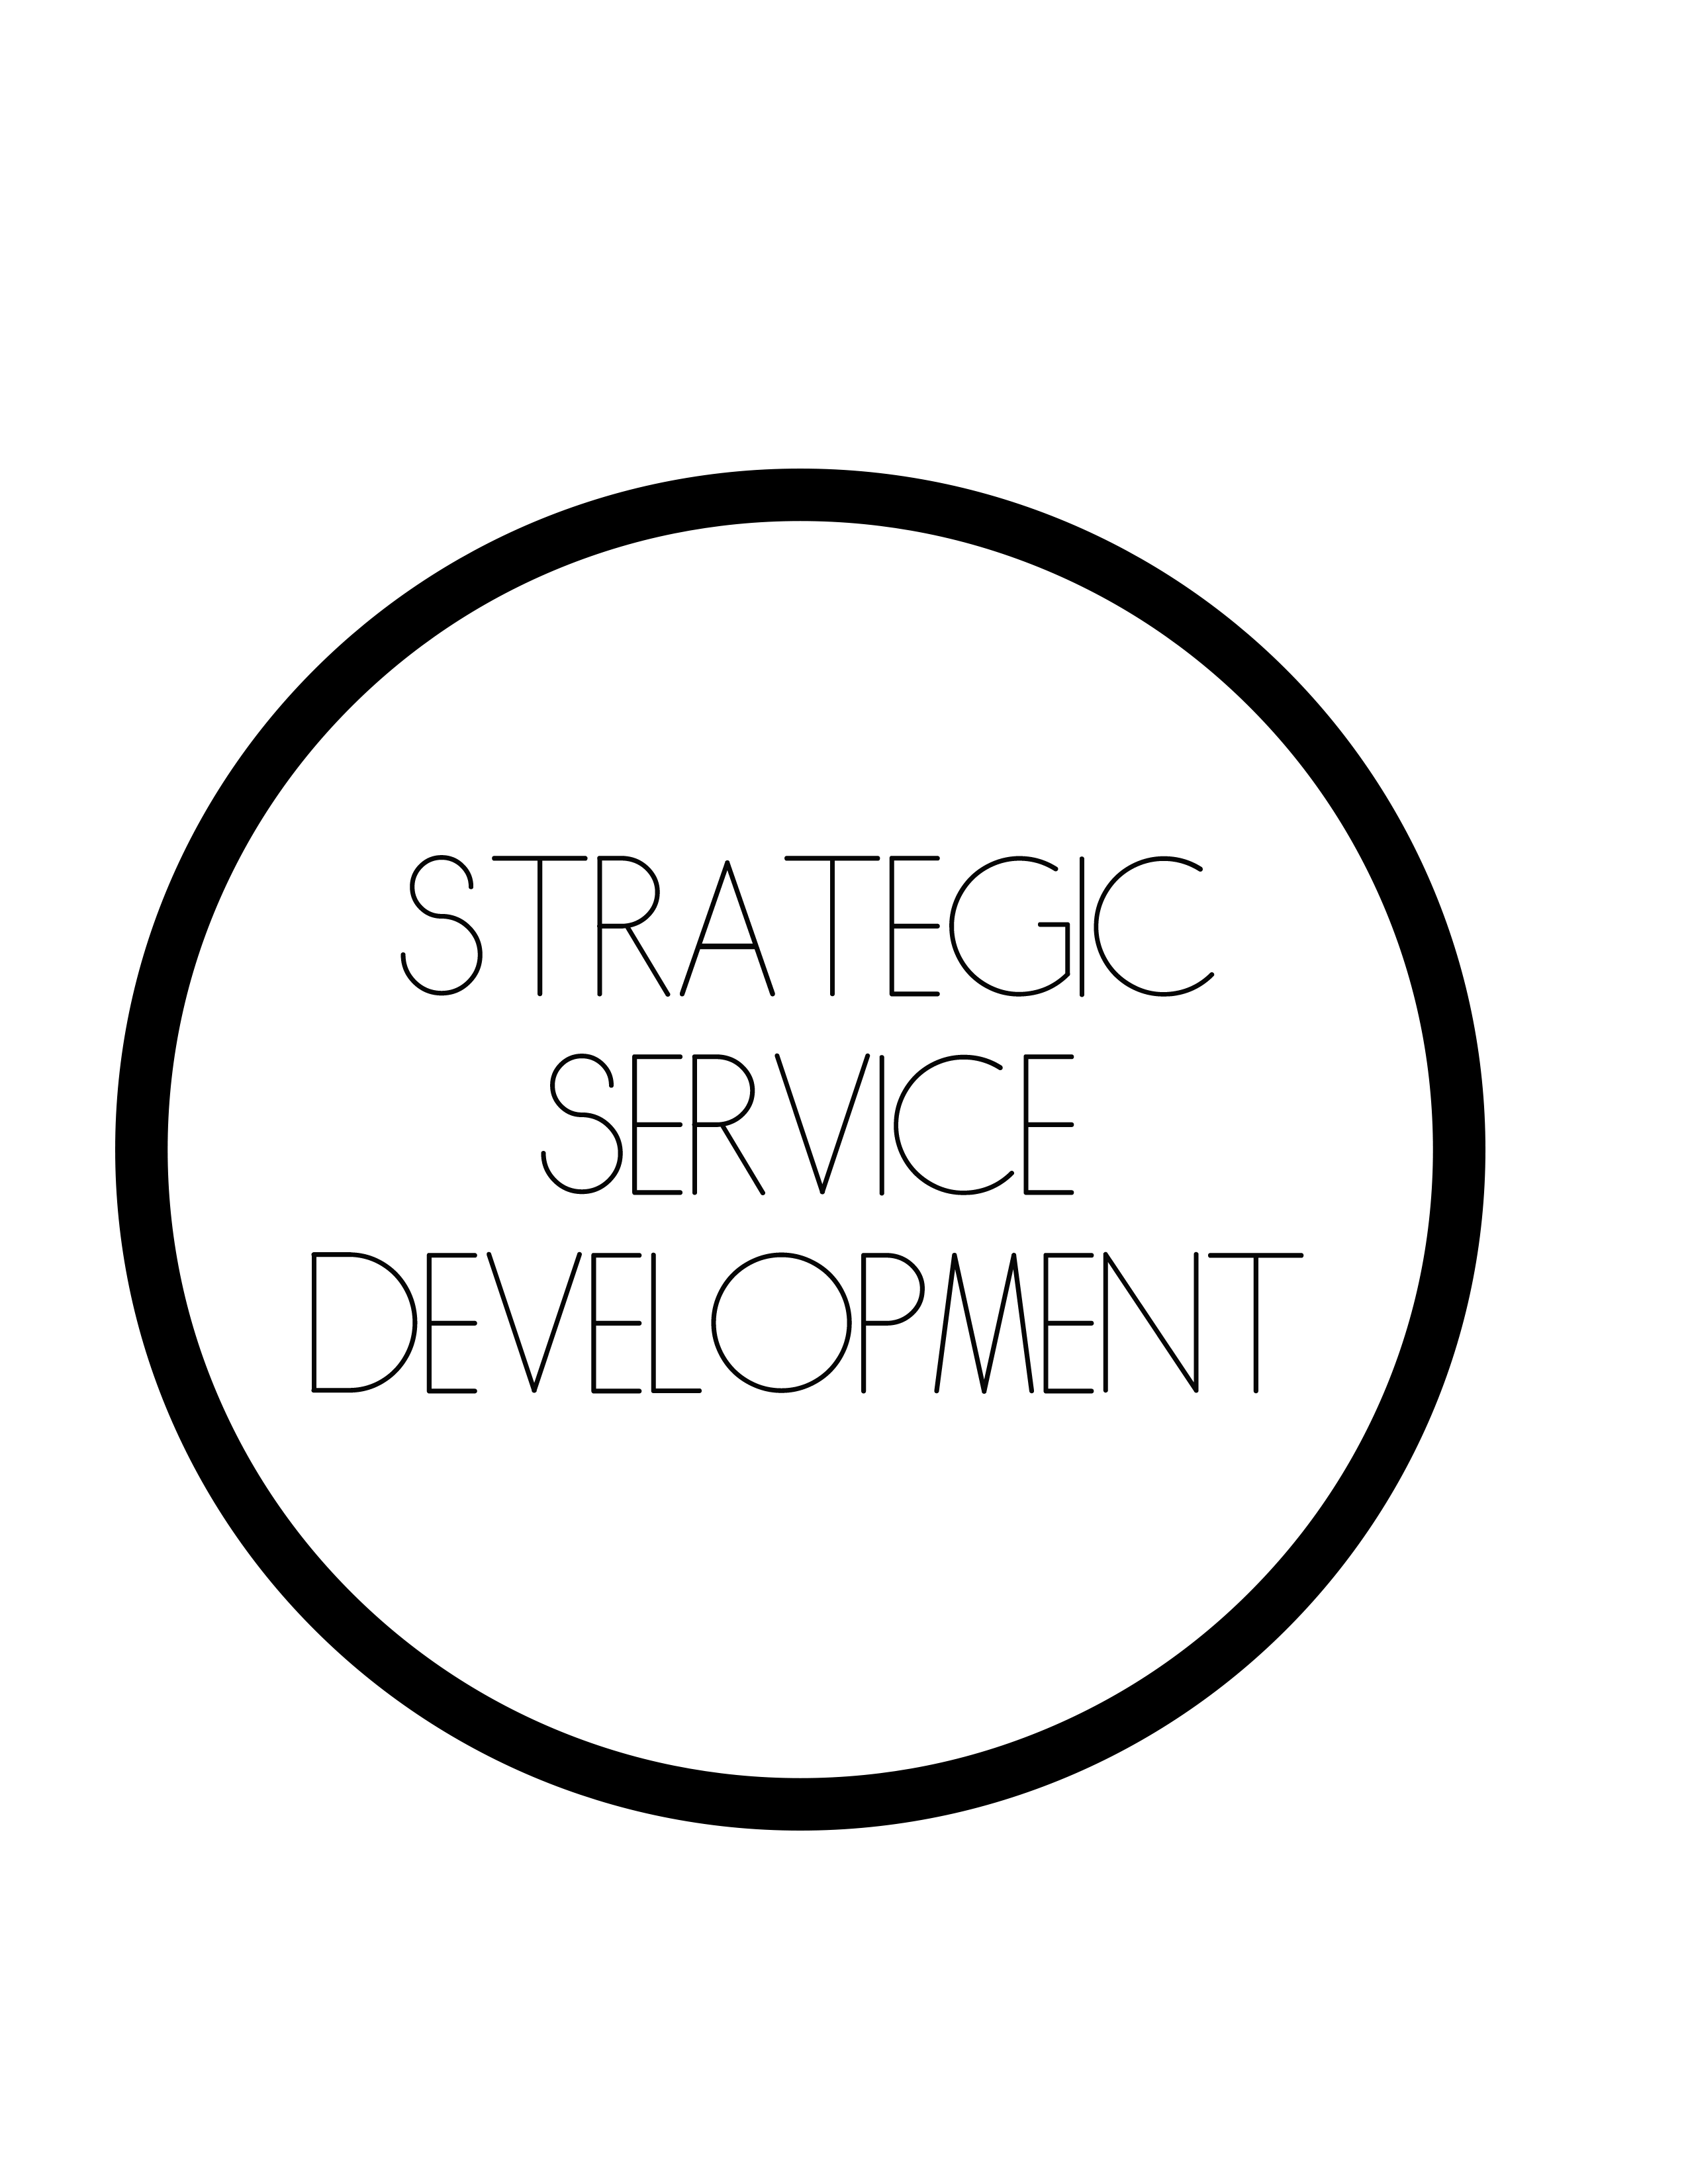 Strategic service development